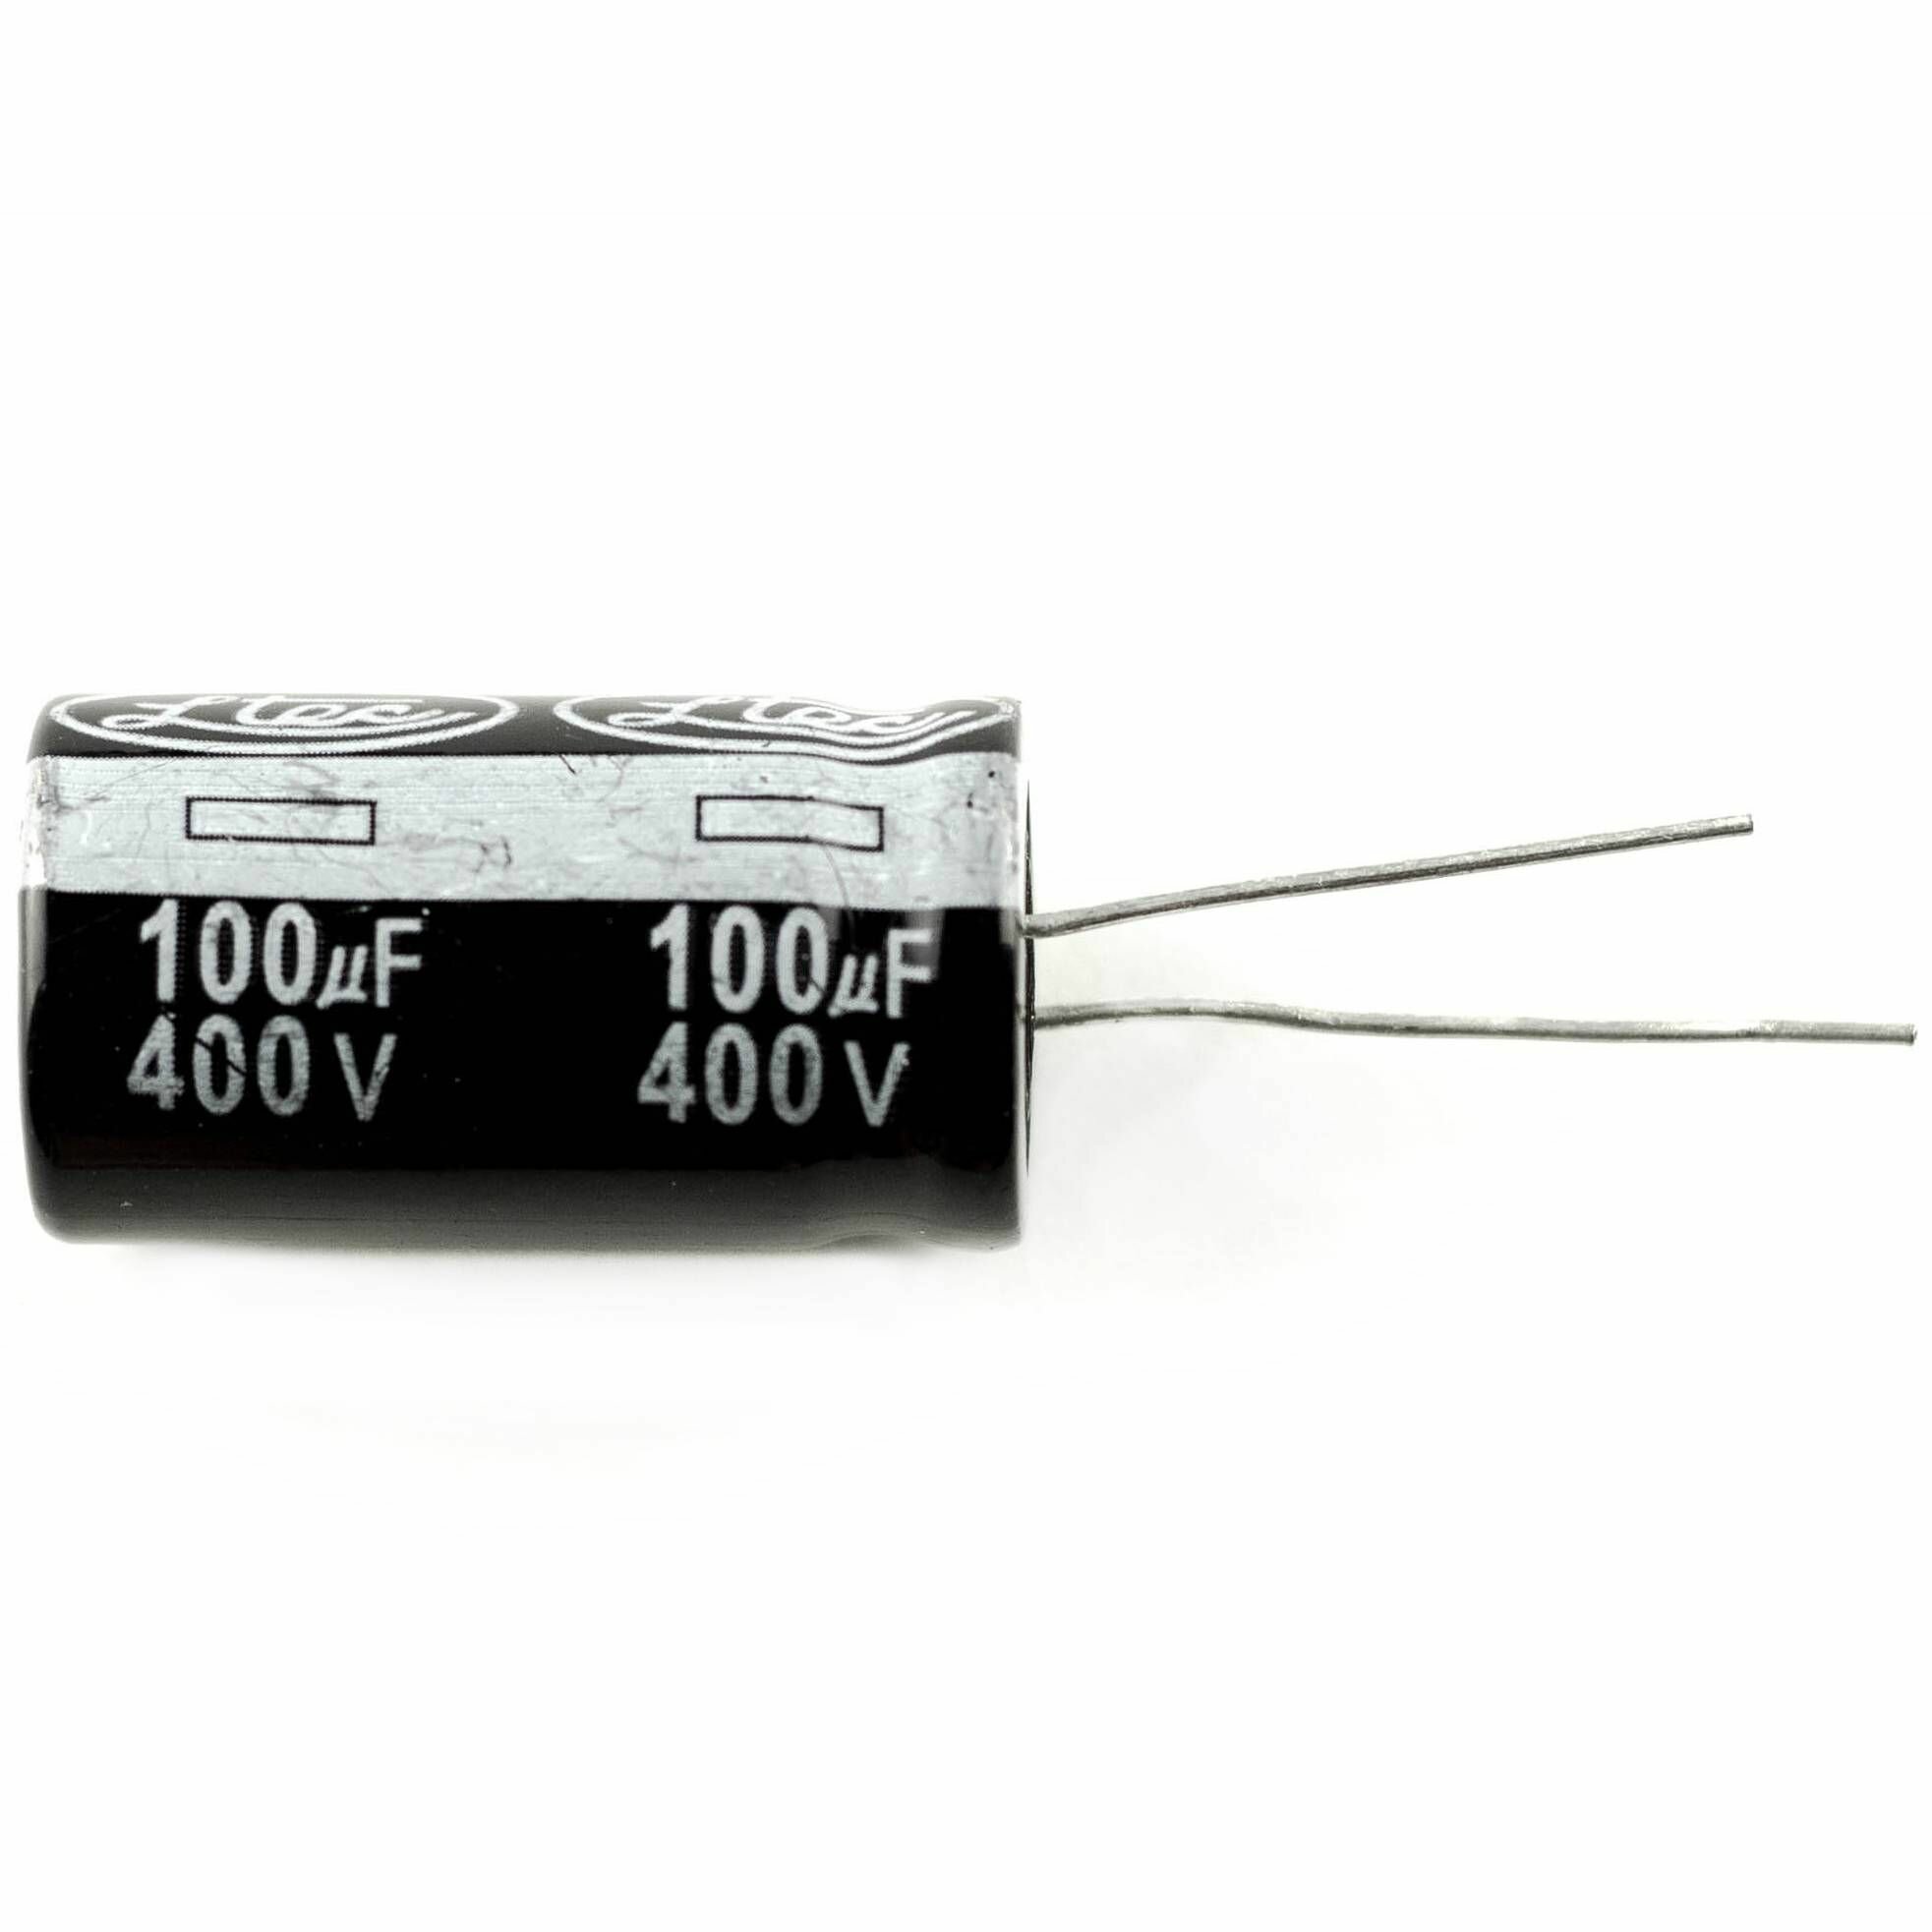 Конденсатор электролитический 400 V, 100 uF, 1 шт.